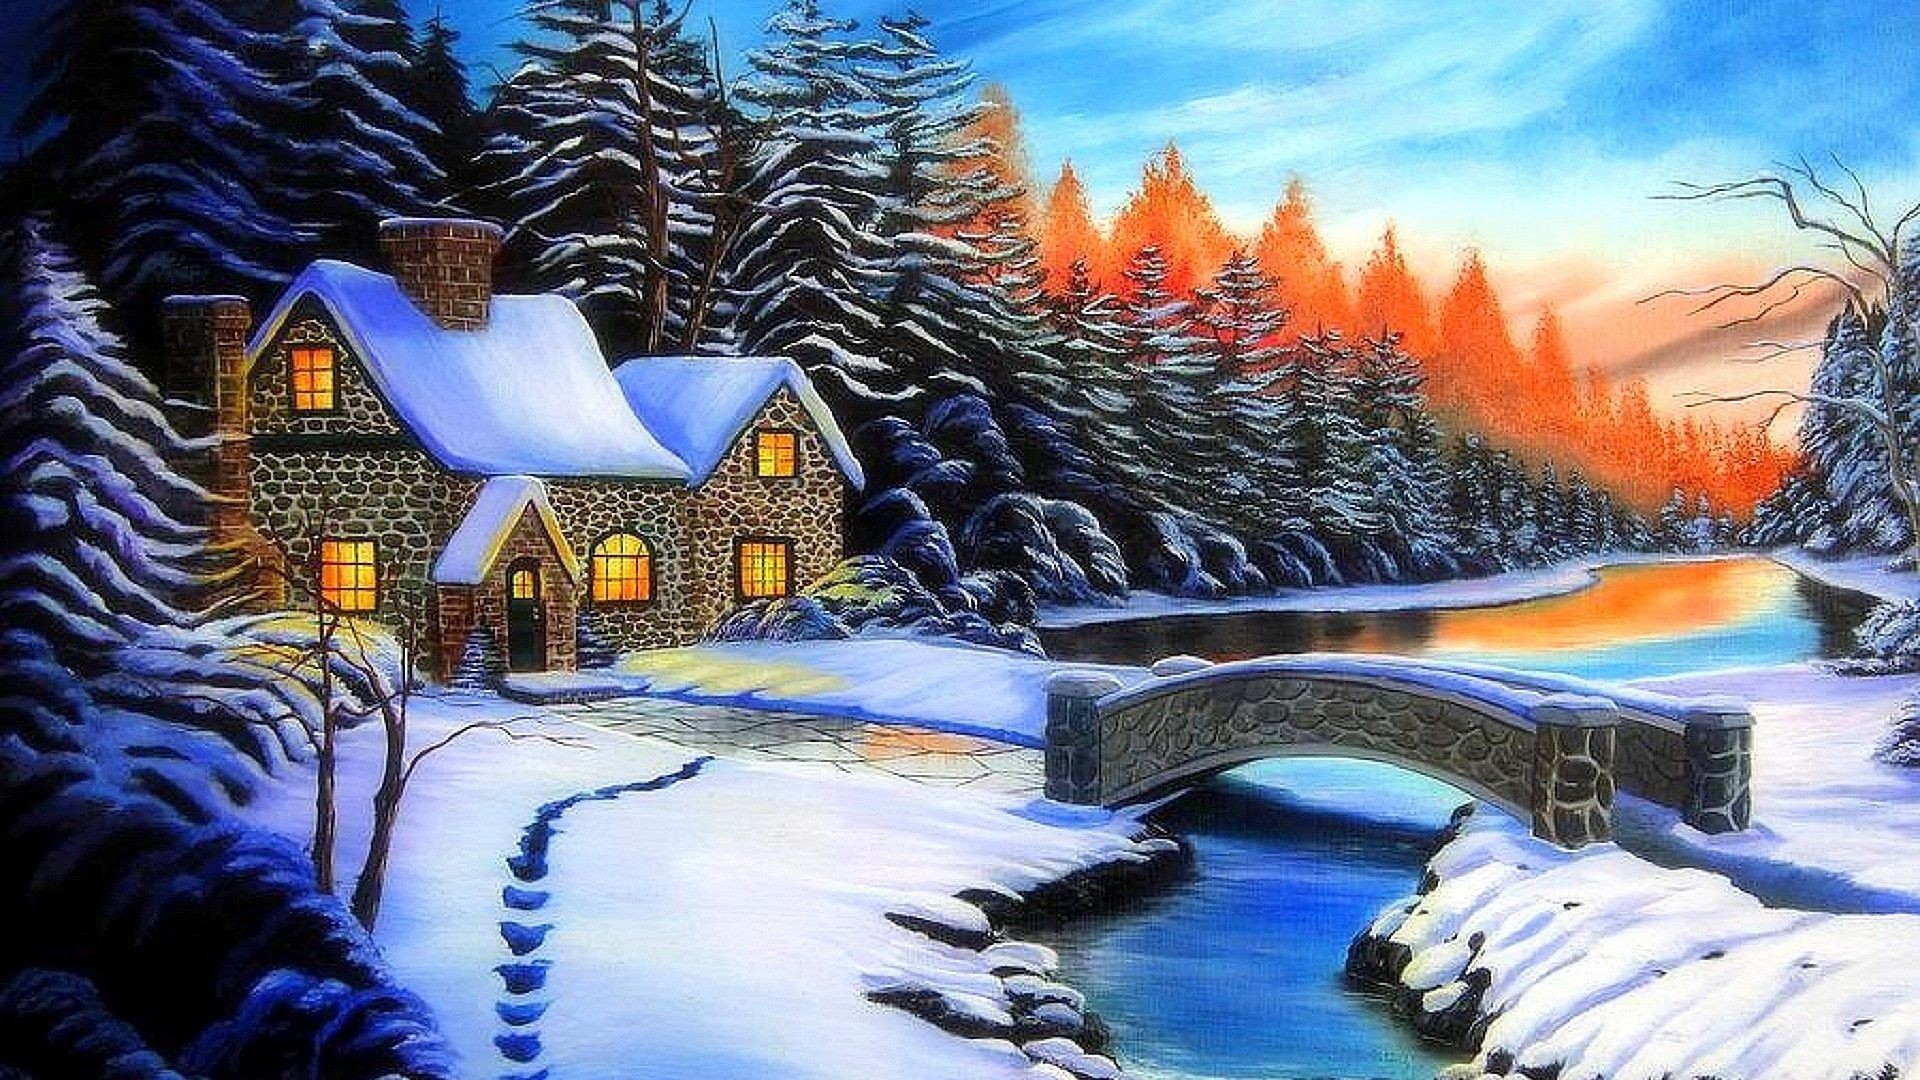 1920x1080 Cozy winter scenes wallpapers download at wallpaperbro com jpg  Cozy  winter scenes wallpaper